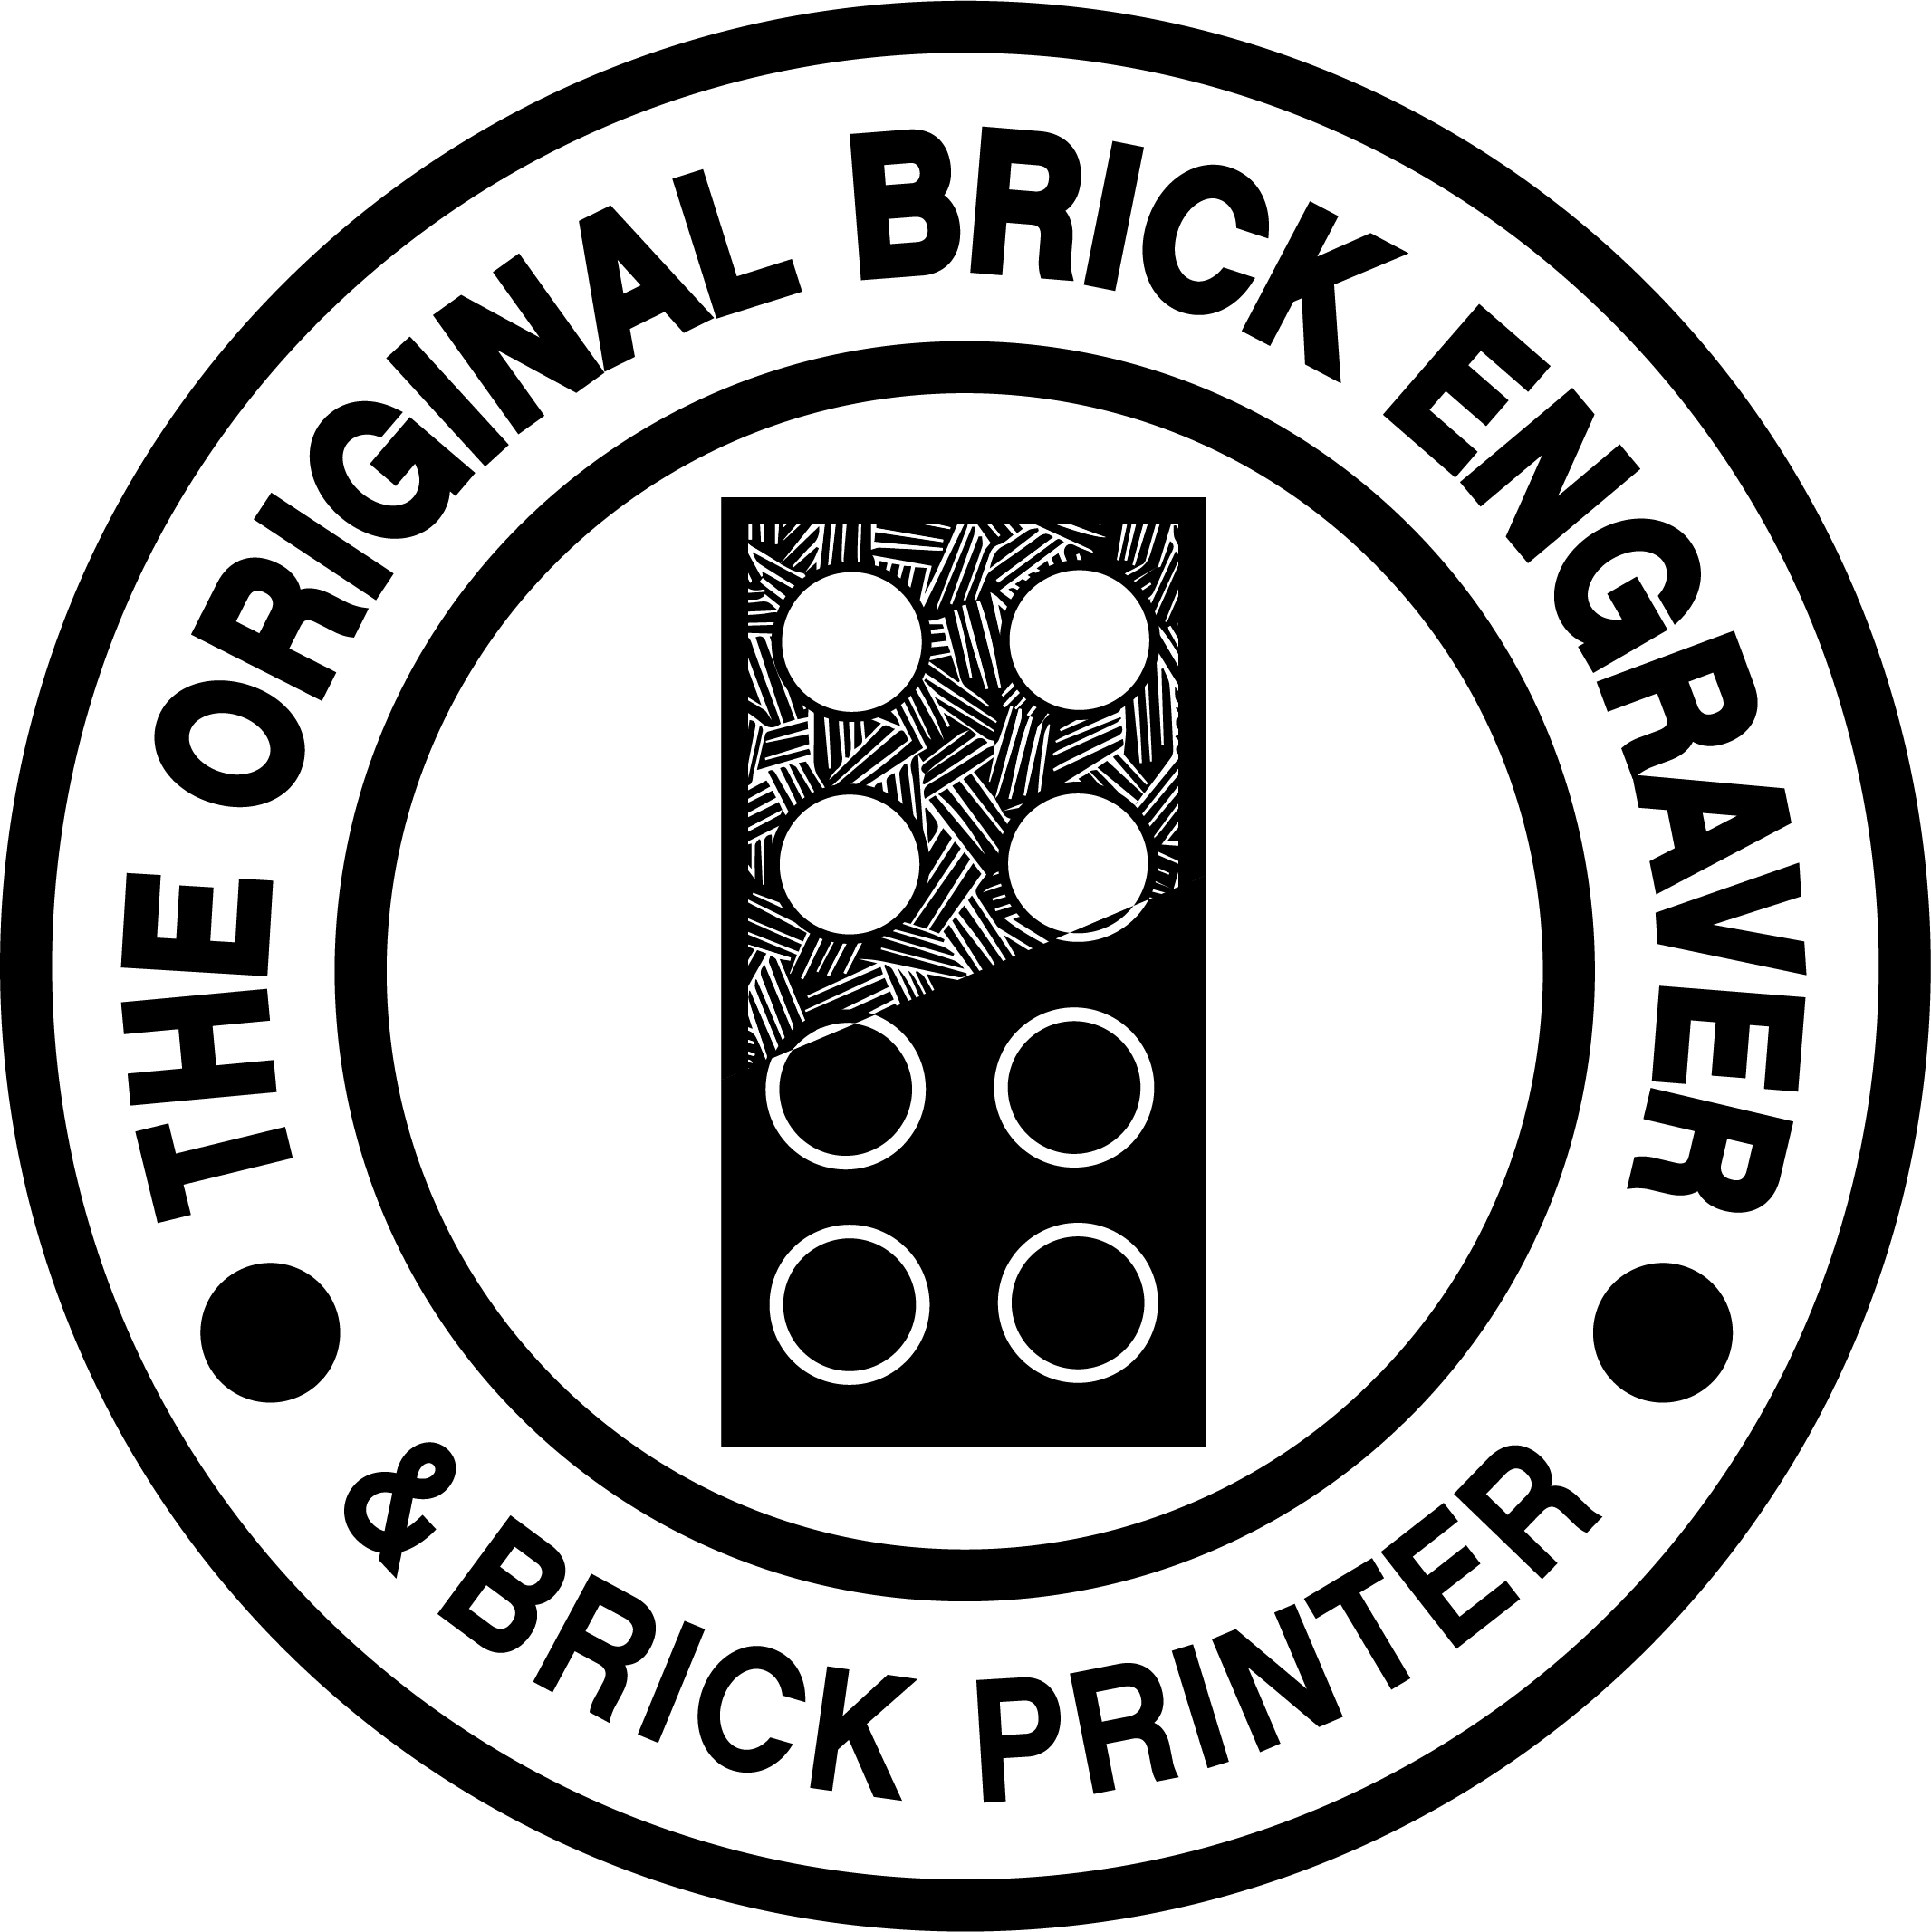 The Original BrickEngraver/BrickPrinter